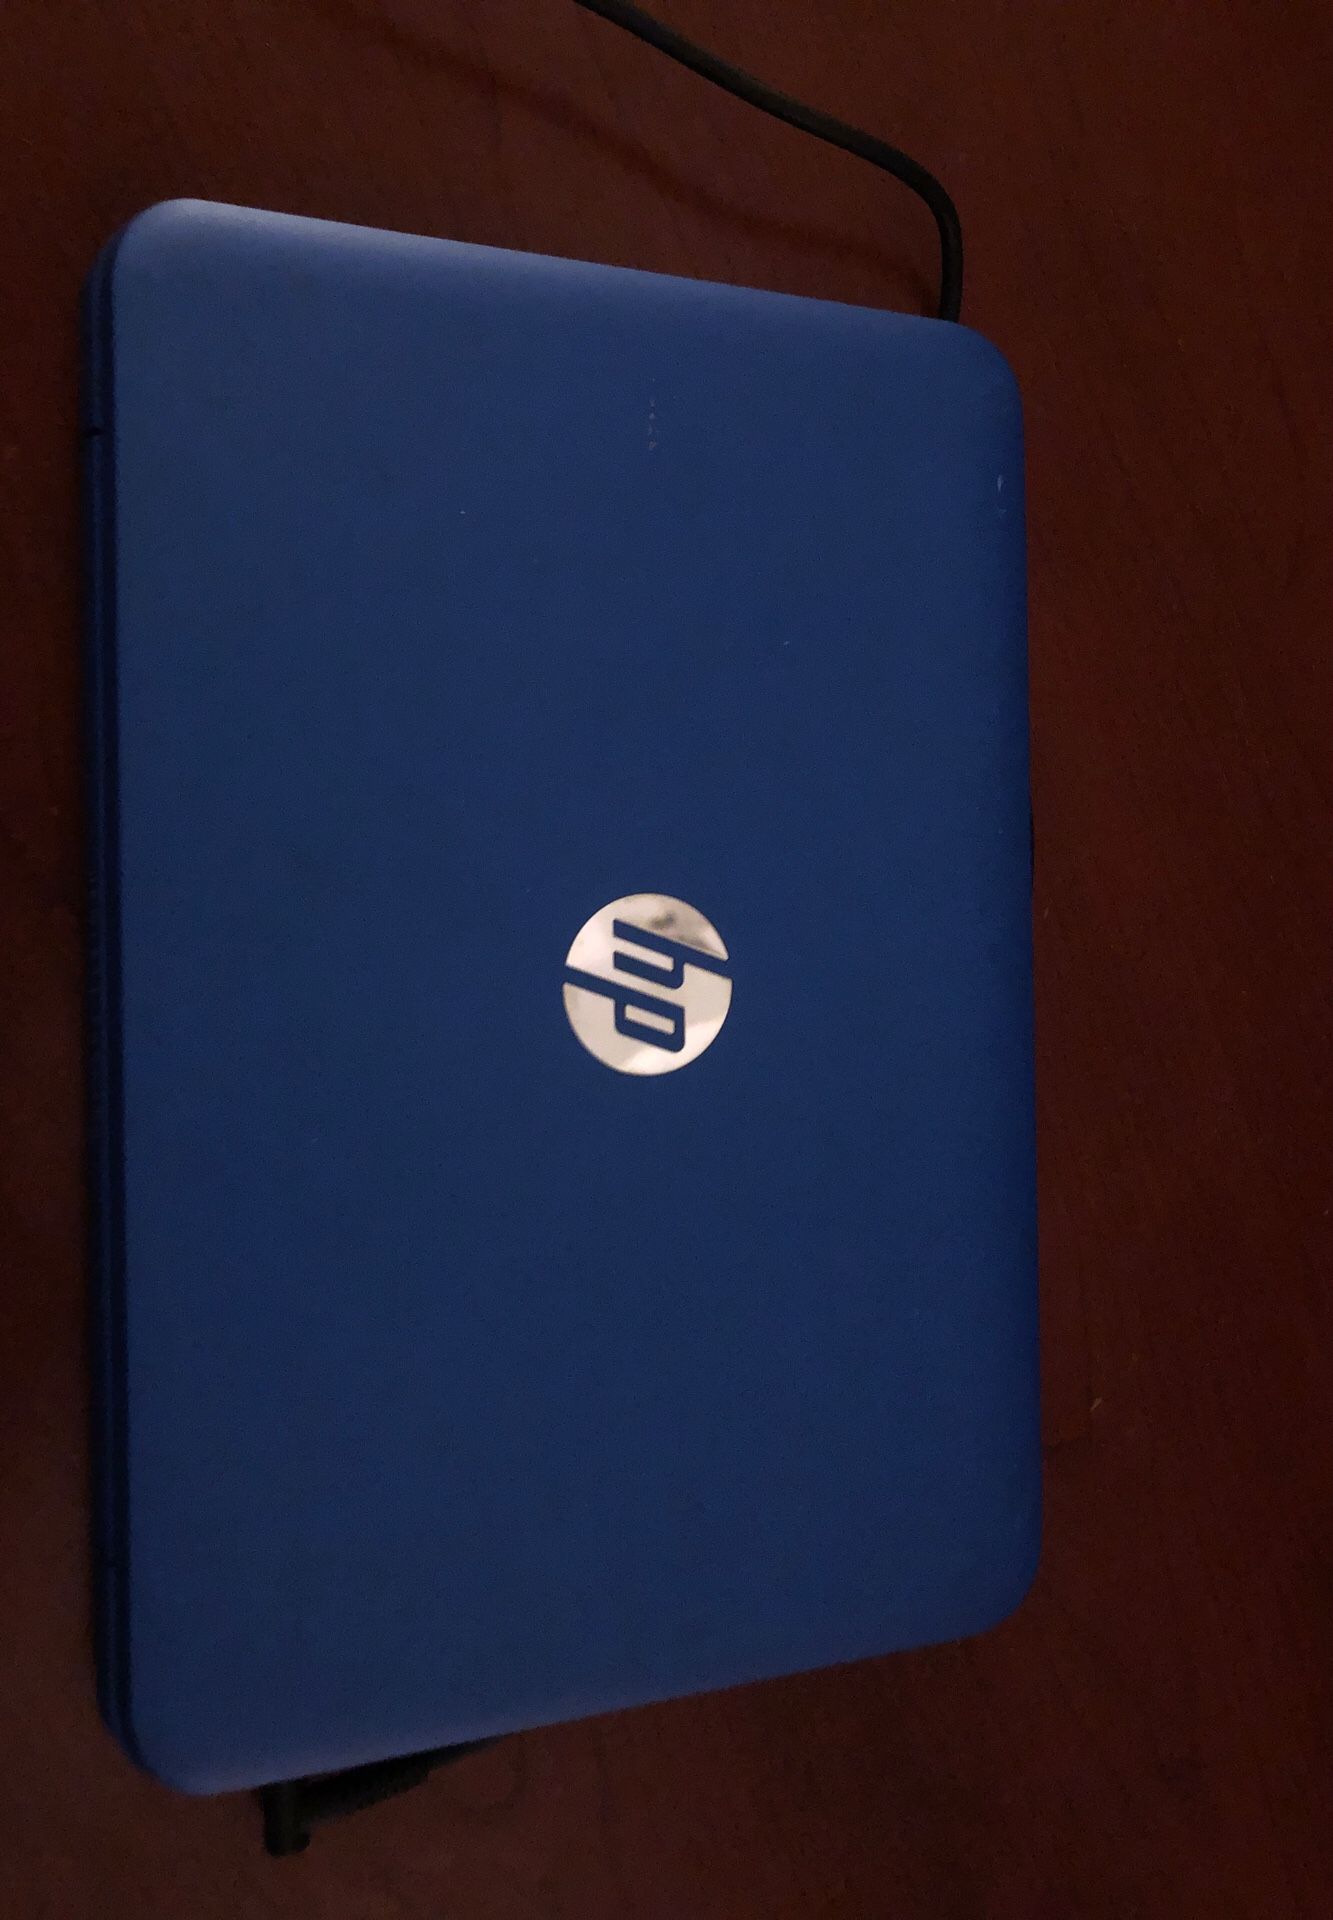 Hp stream notebook pc 11 laptop